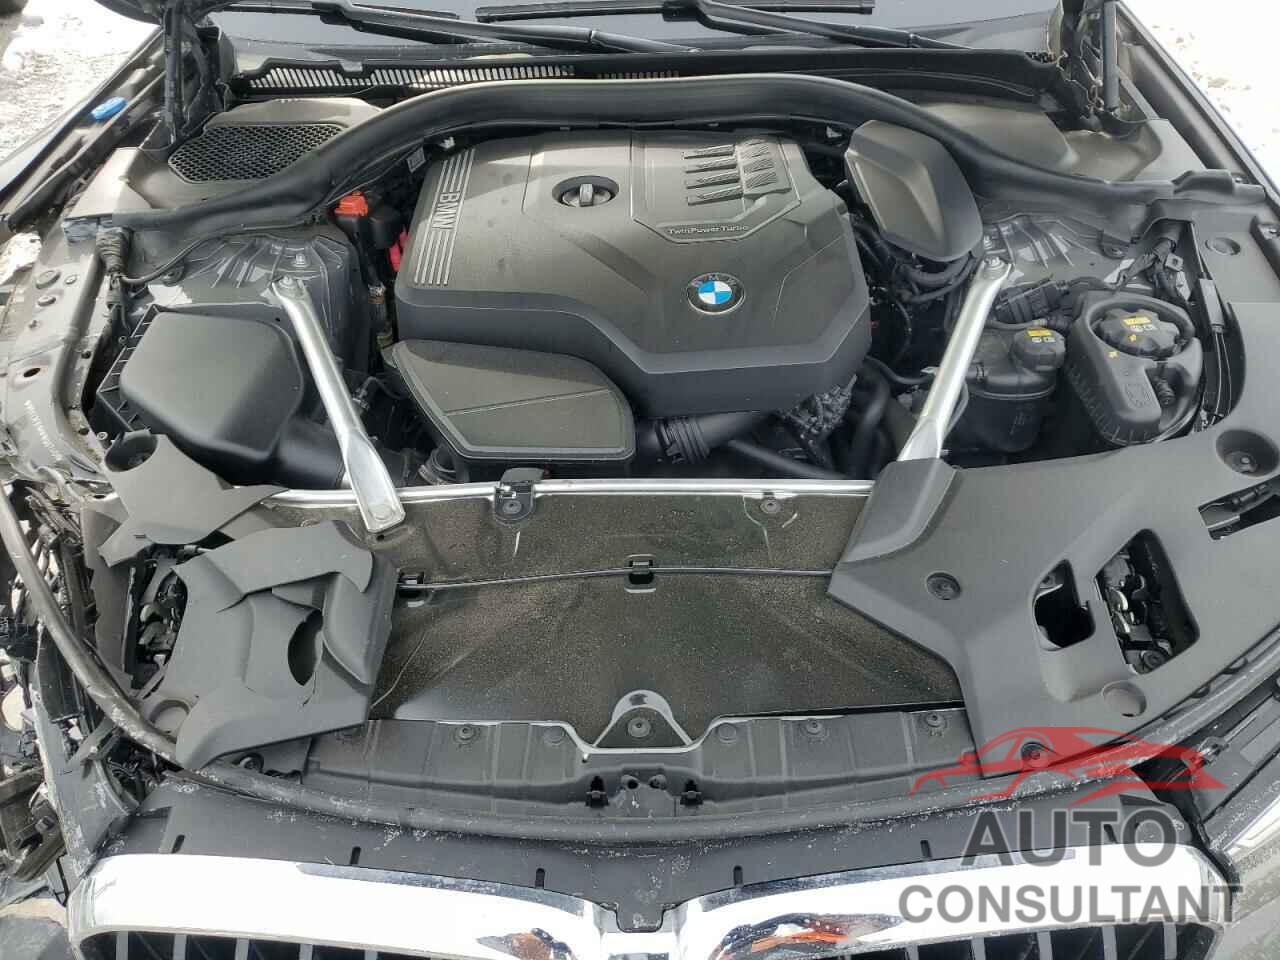 BMW 5 SERIES 2021 - WBA13BJ01MWW98740